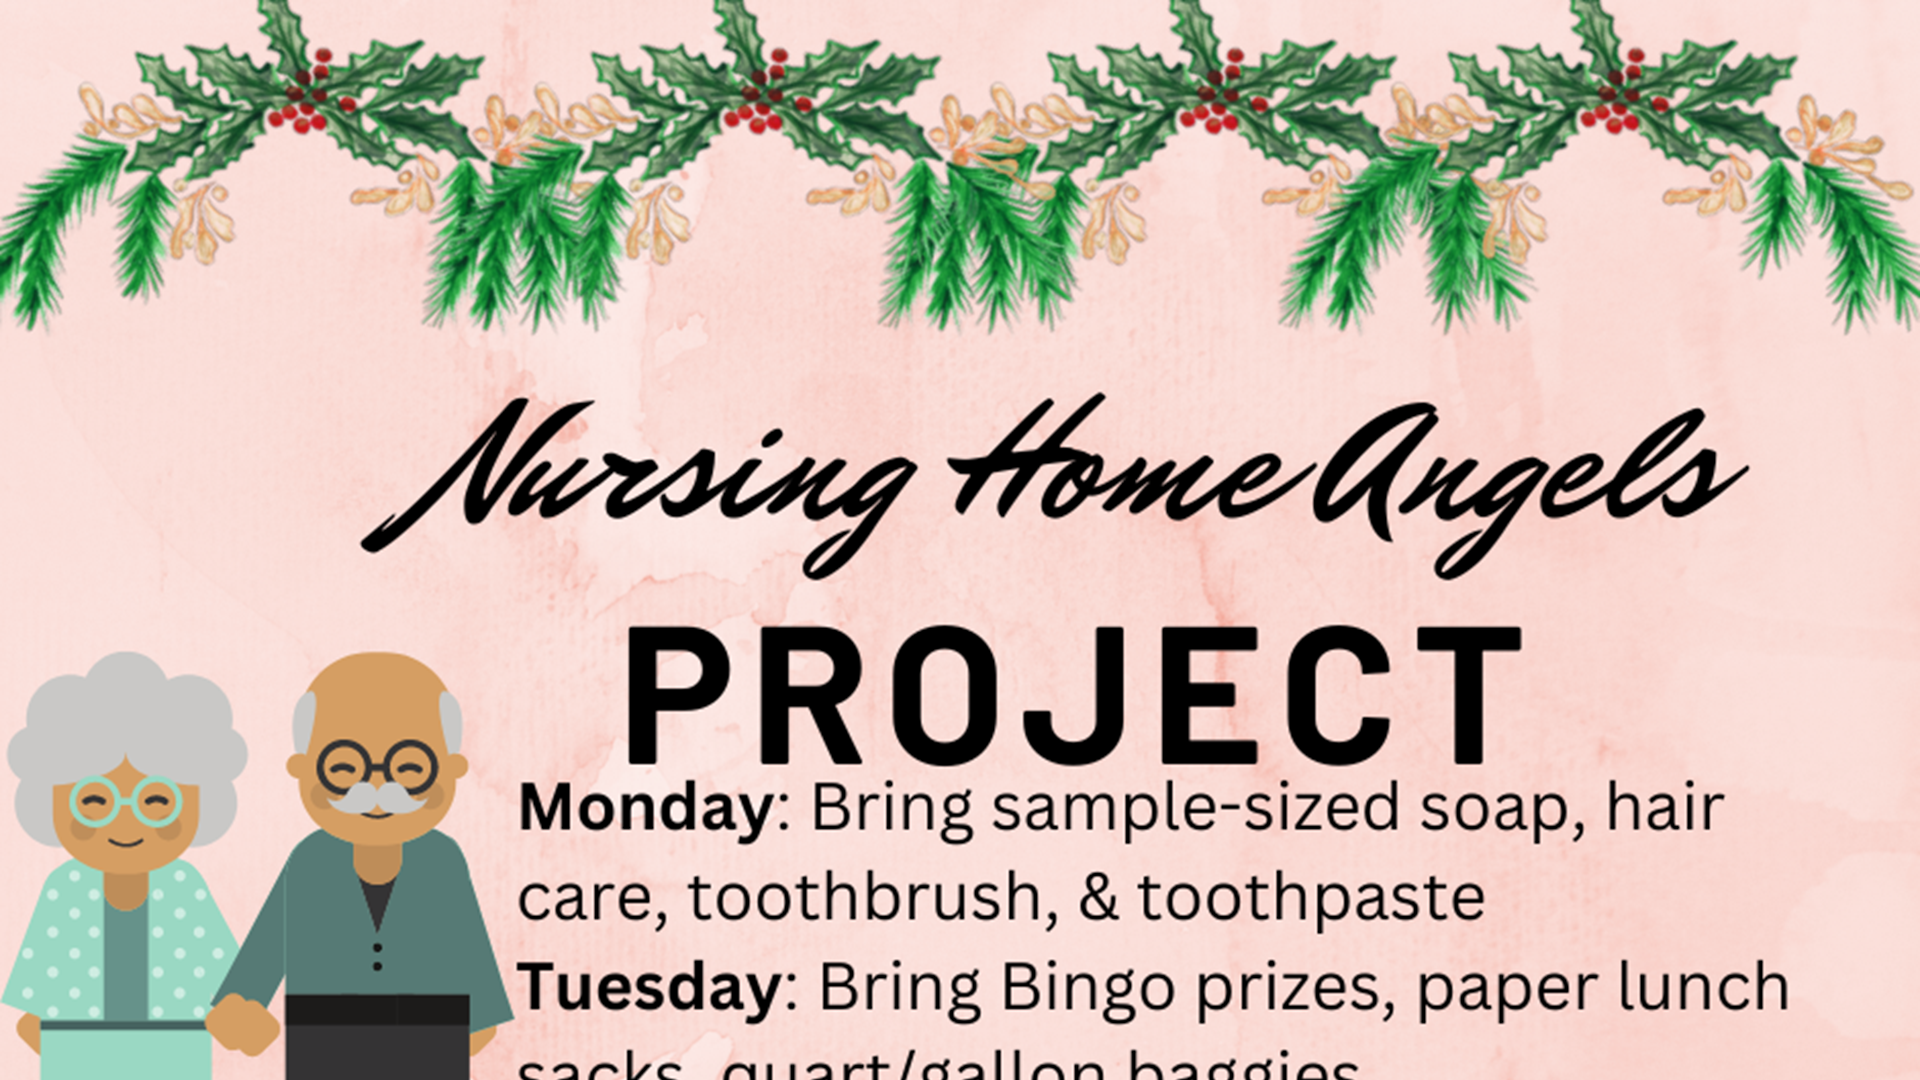 Nursing Home Angels Project